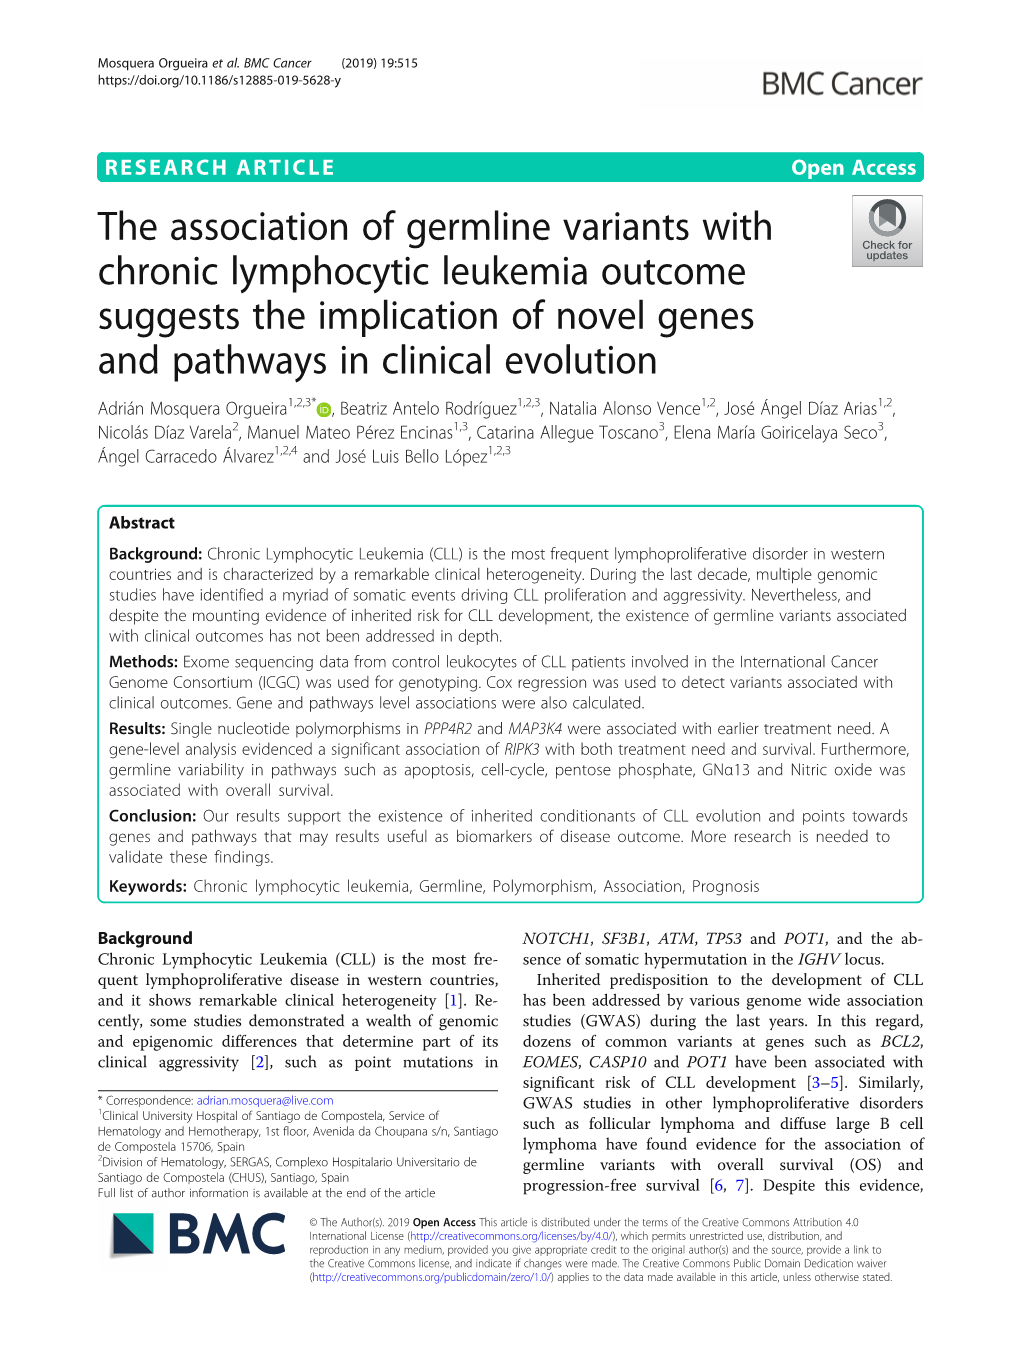 The Association of Germline Variants with Chronic Lymphocytic Leukemia